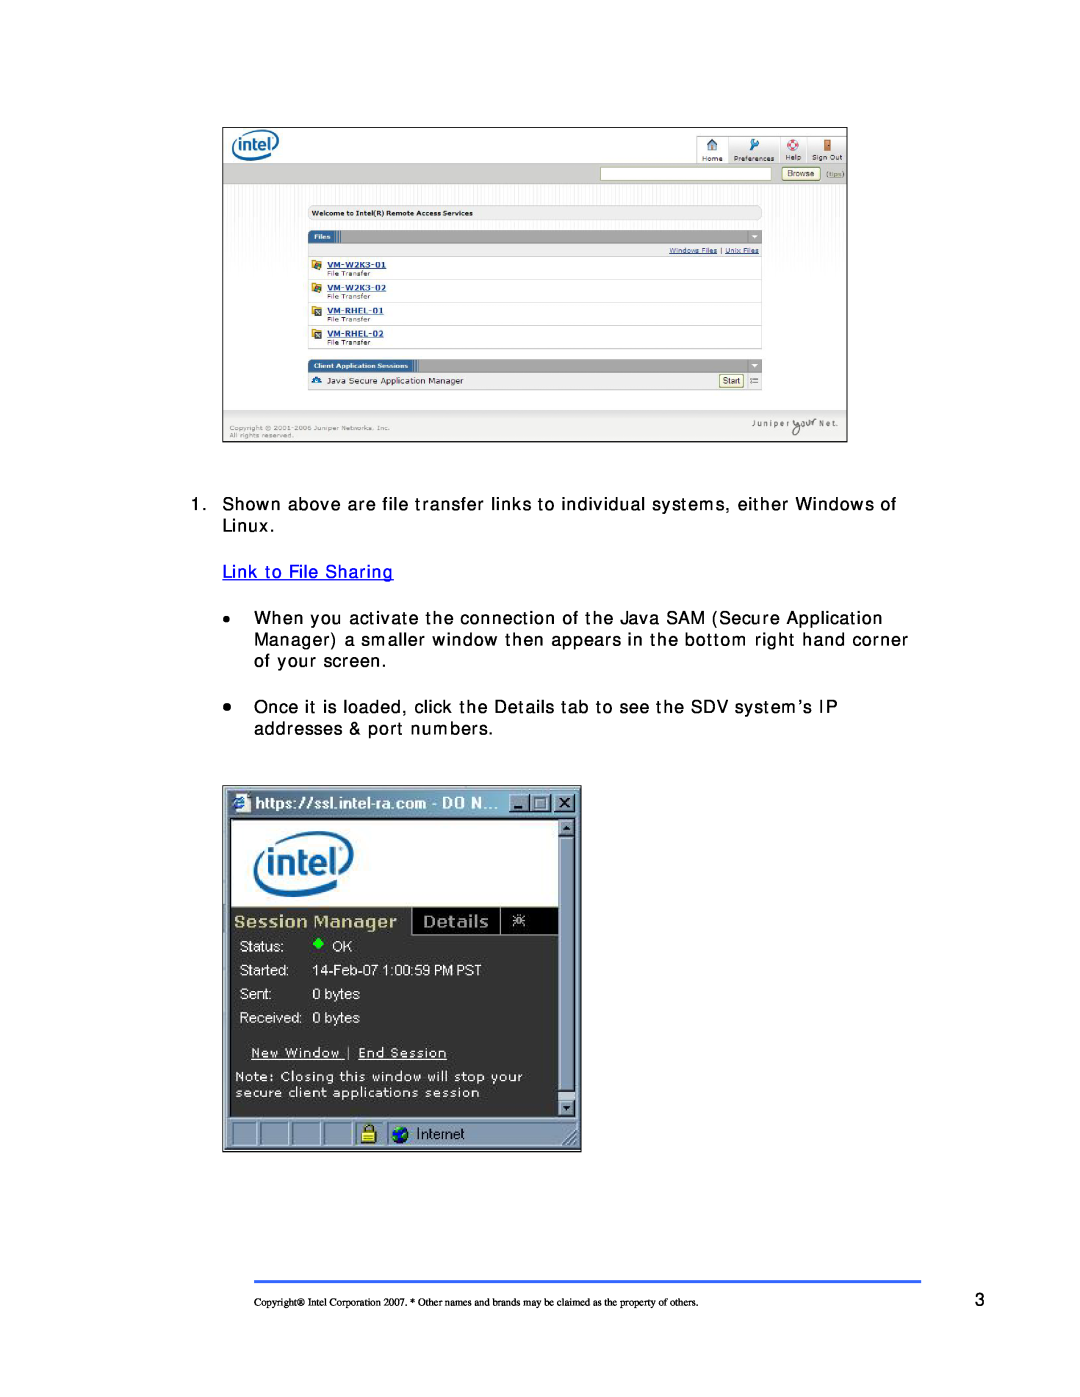 Intel 120000 manual Link to File Sharing 